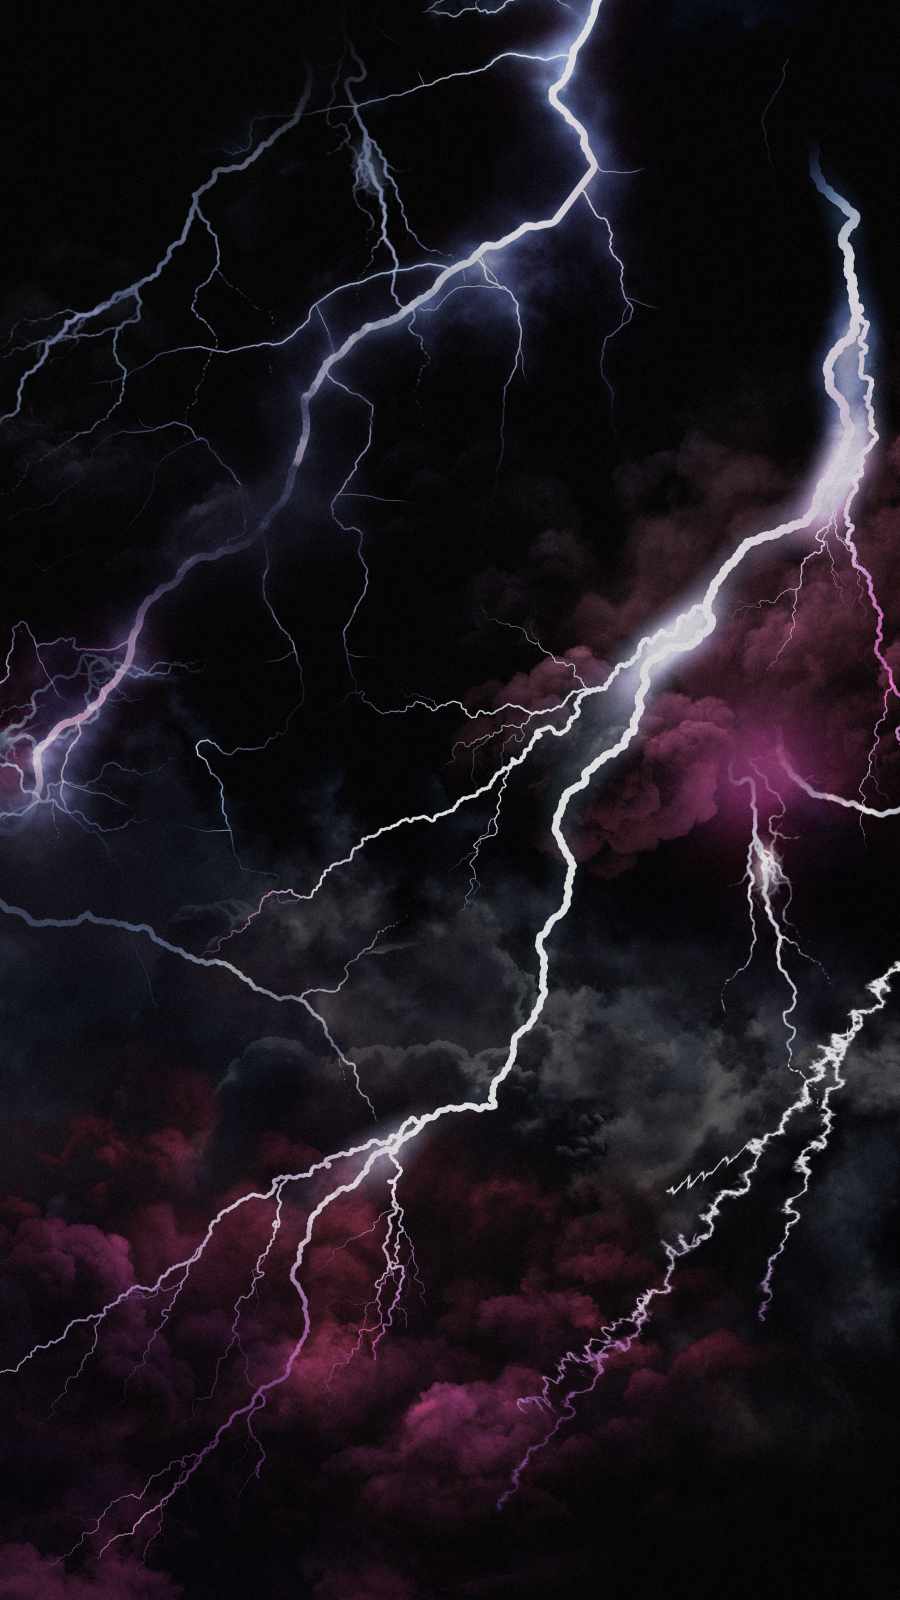 Thunder Storm iPhone Wallpaper